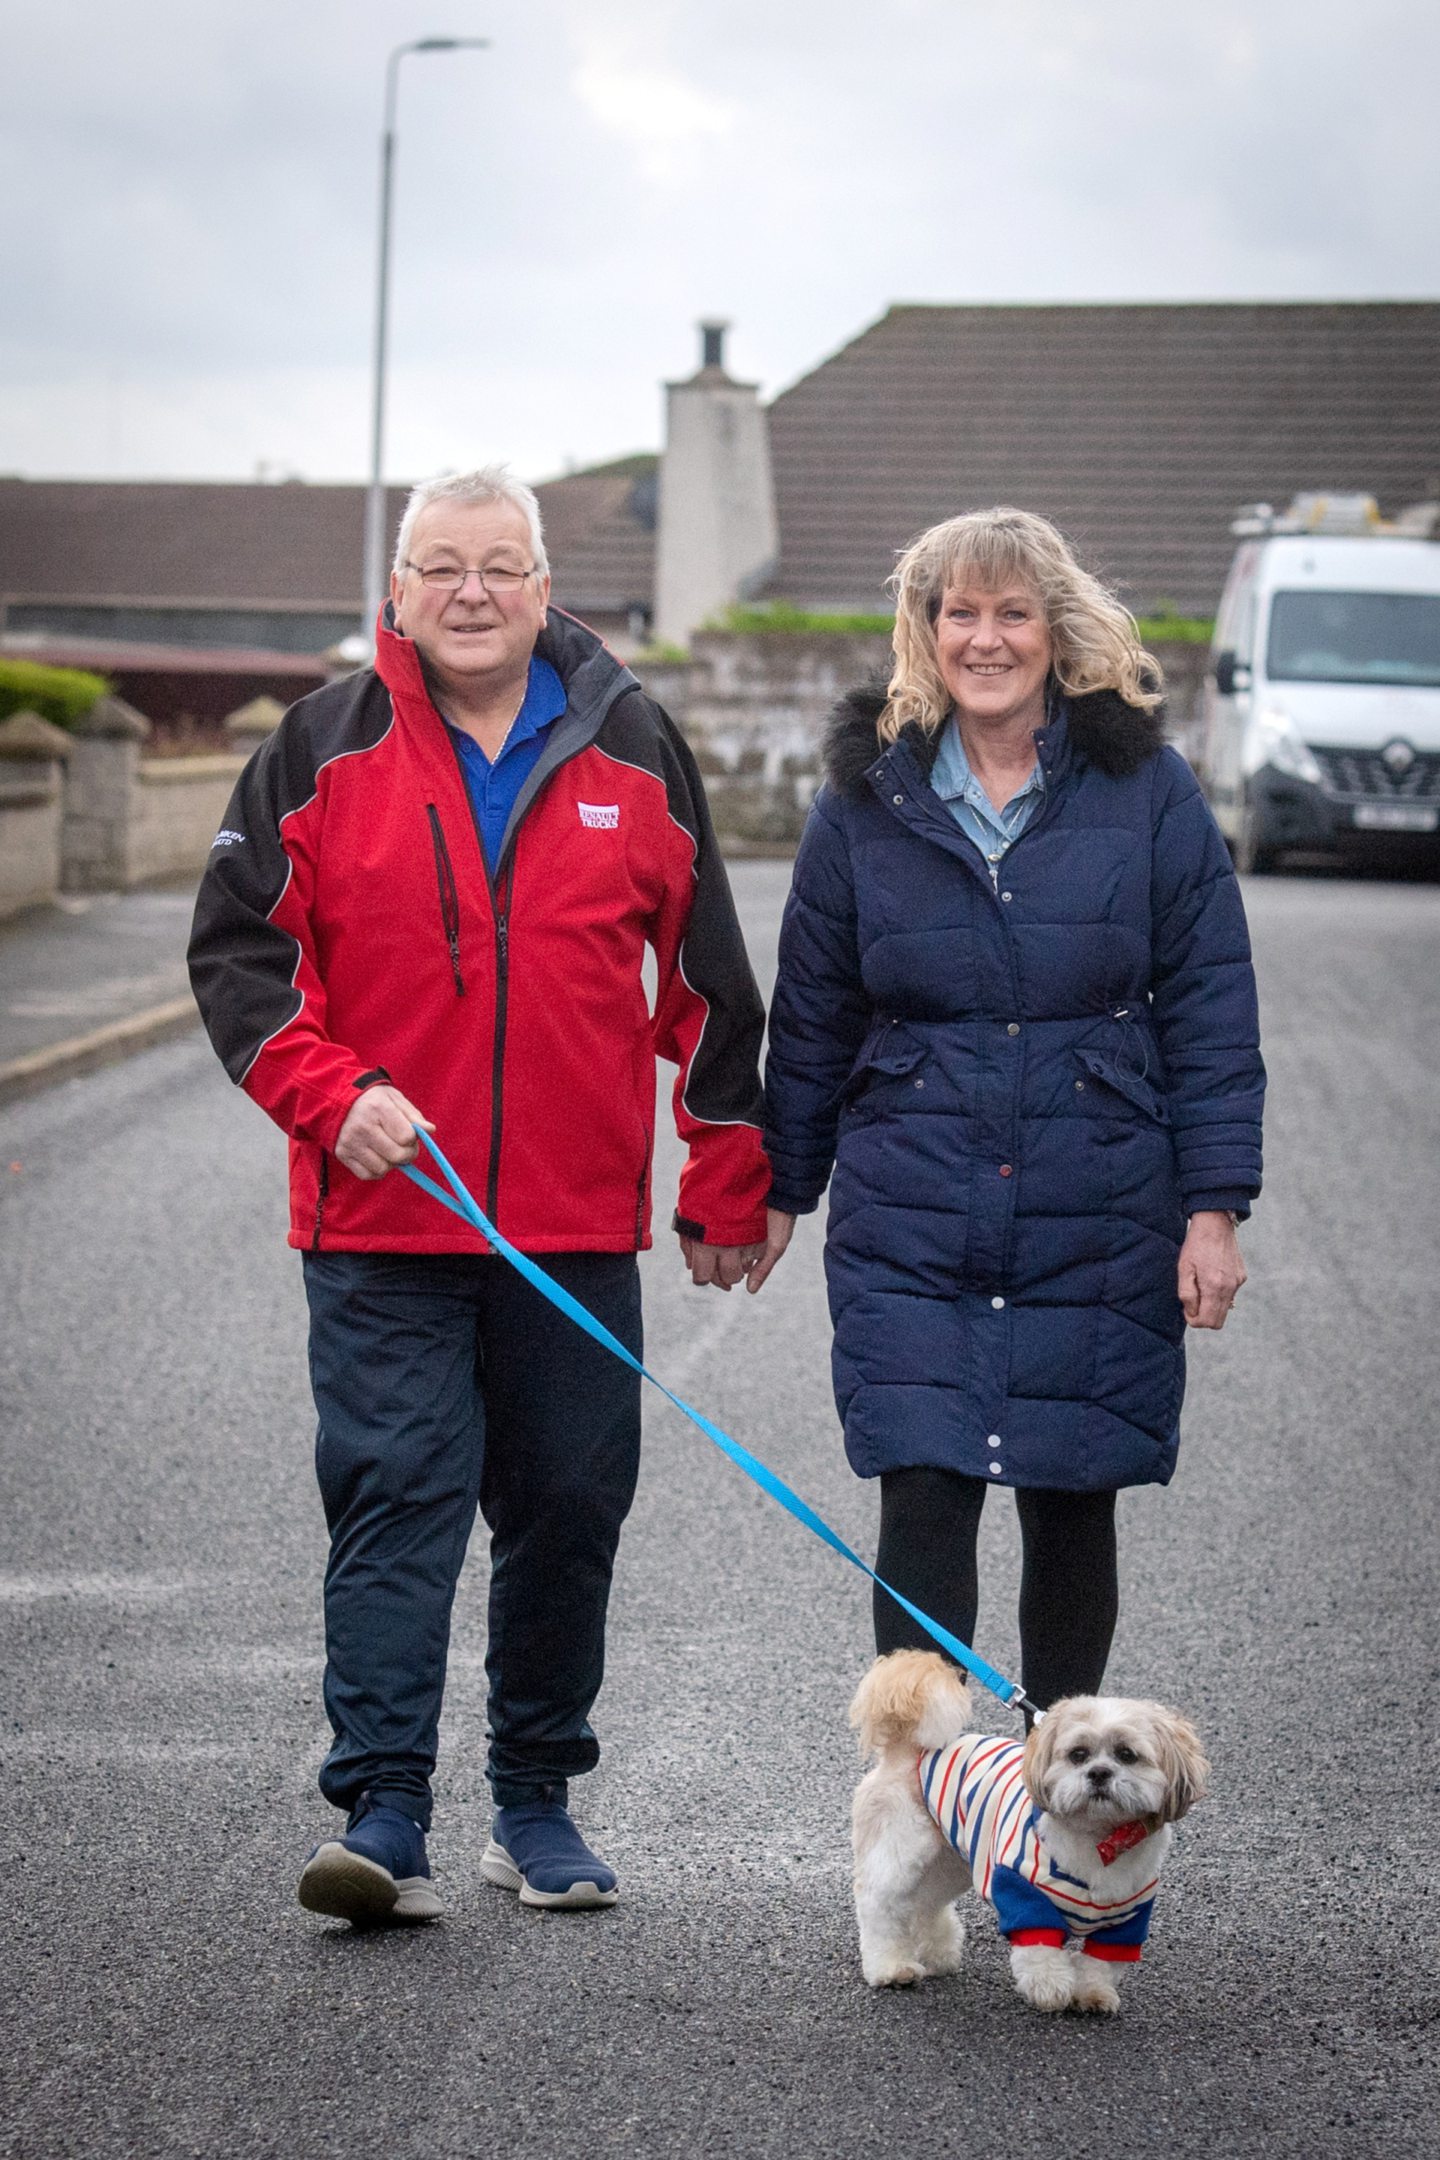 Tommy and Margaret walking down a street Fraserburgh taking dog Teddy for a walk.